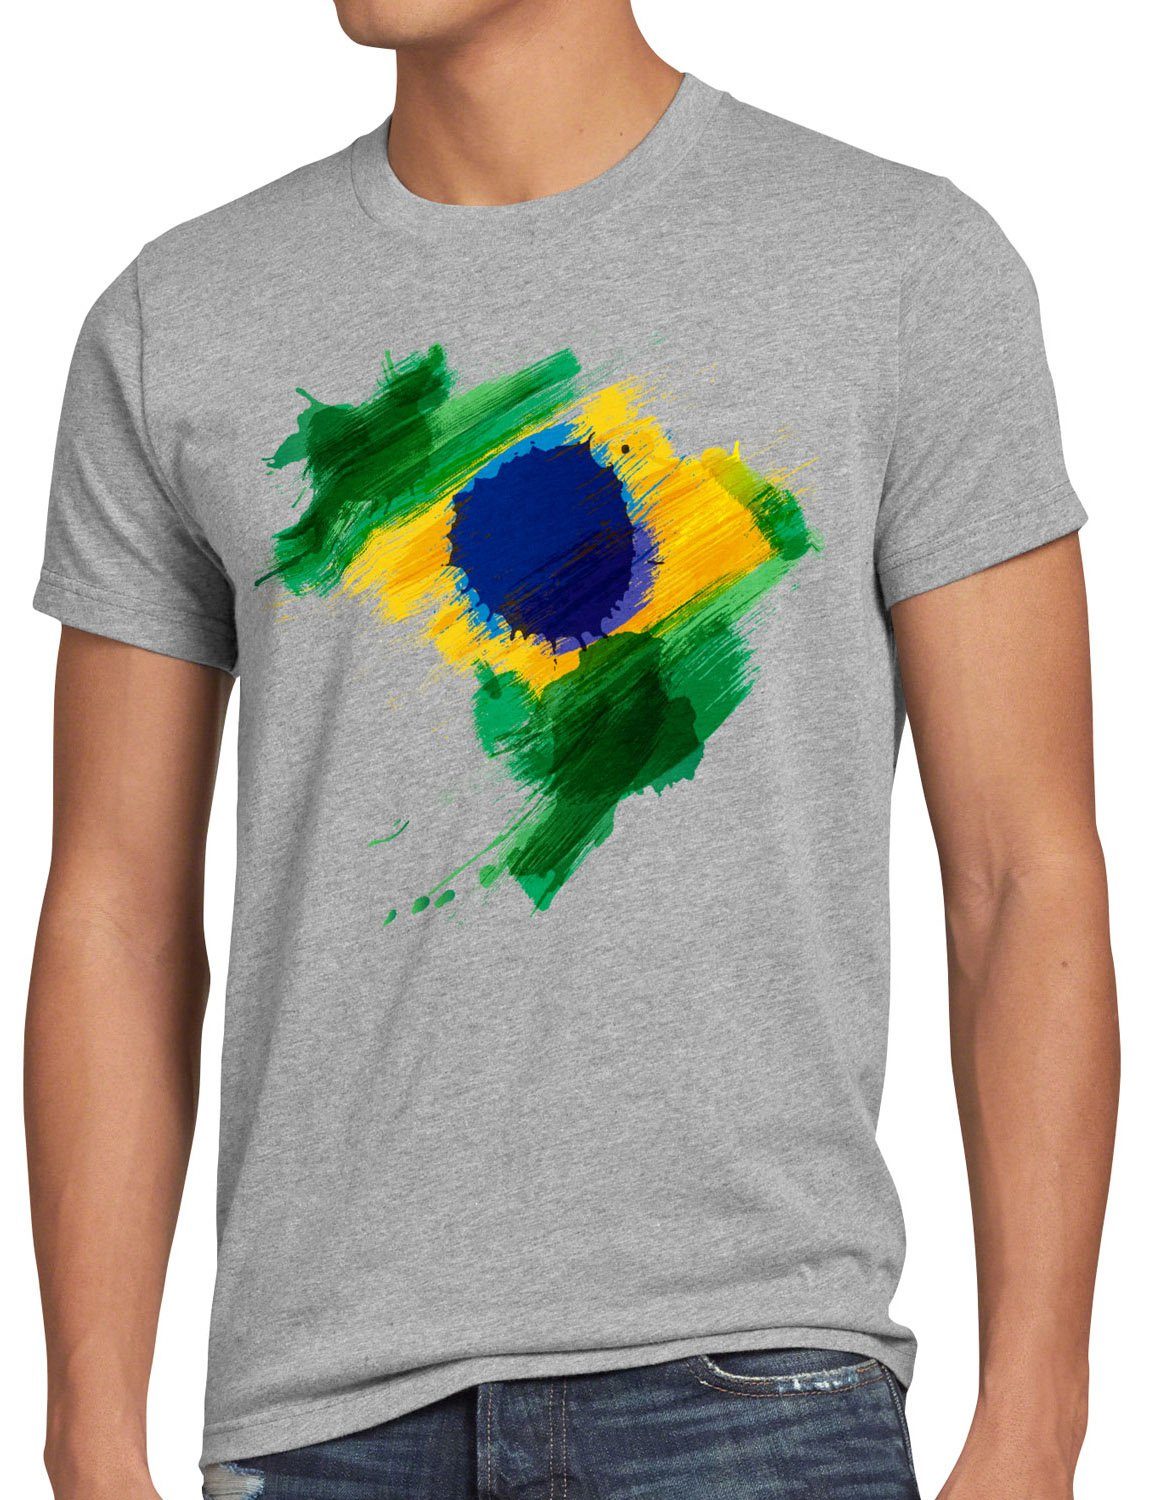 T-Shirt Brazil grau meliert Herren Print-Shirt WM Brasilien Sport Fußball style3 EM Fahne Flagge